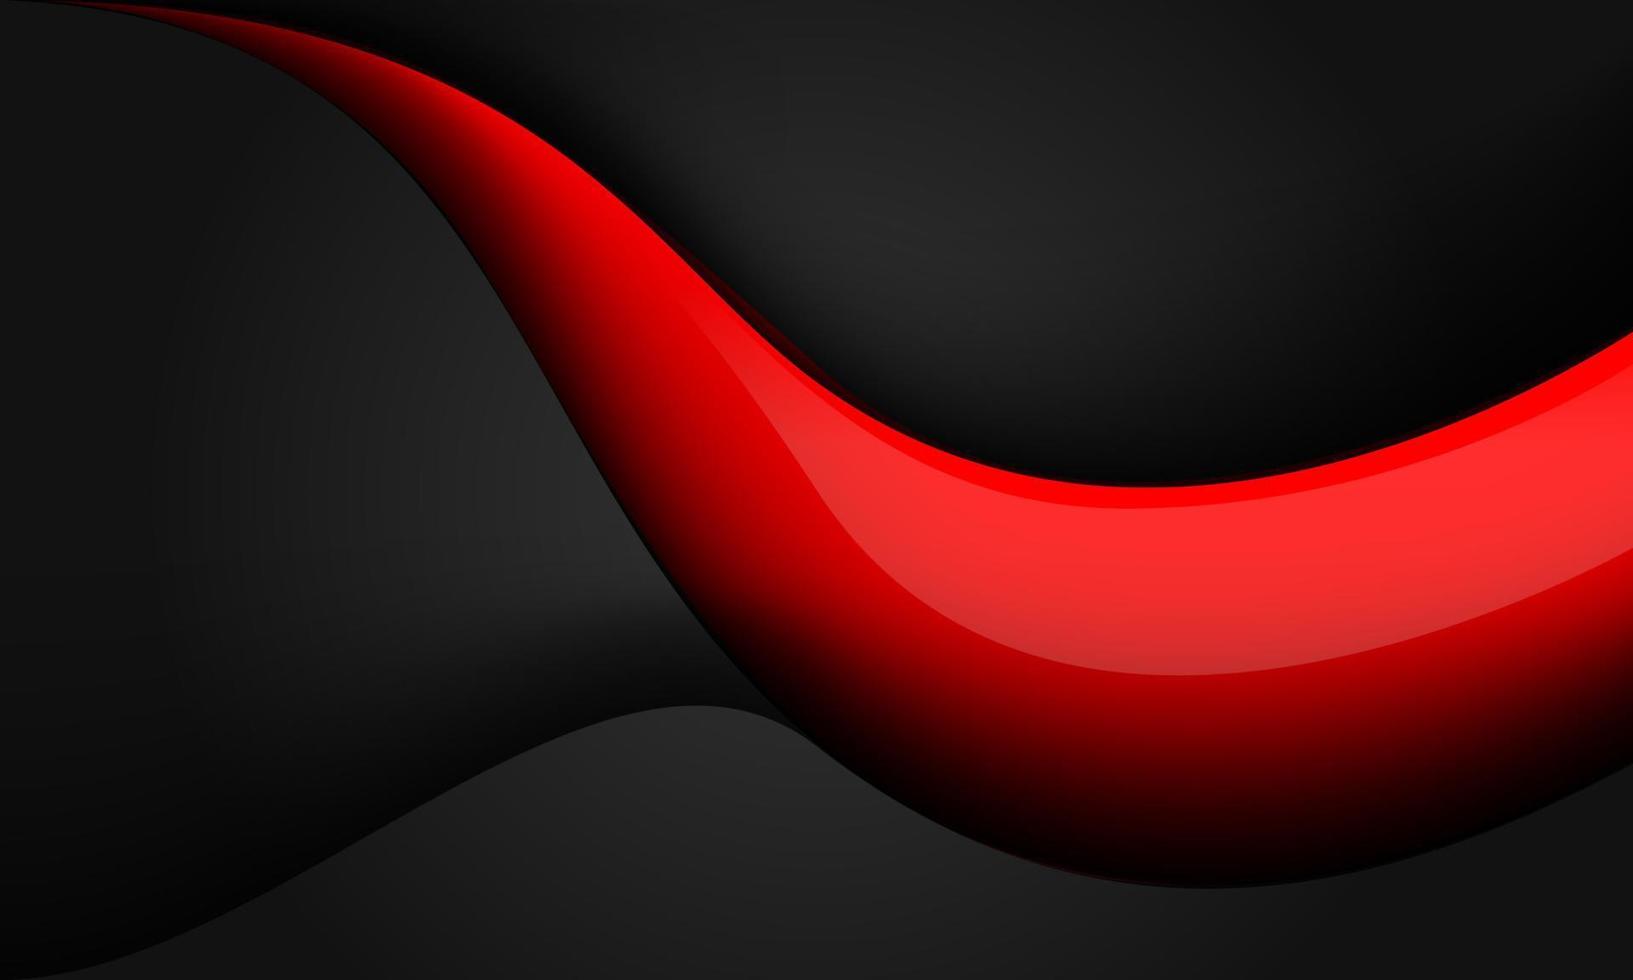 curva de sombra preta brilhante vermelha abstrata no design metálico cinza moderno vetor de fundo futurista